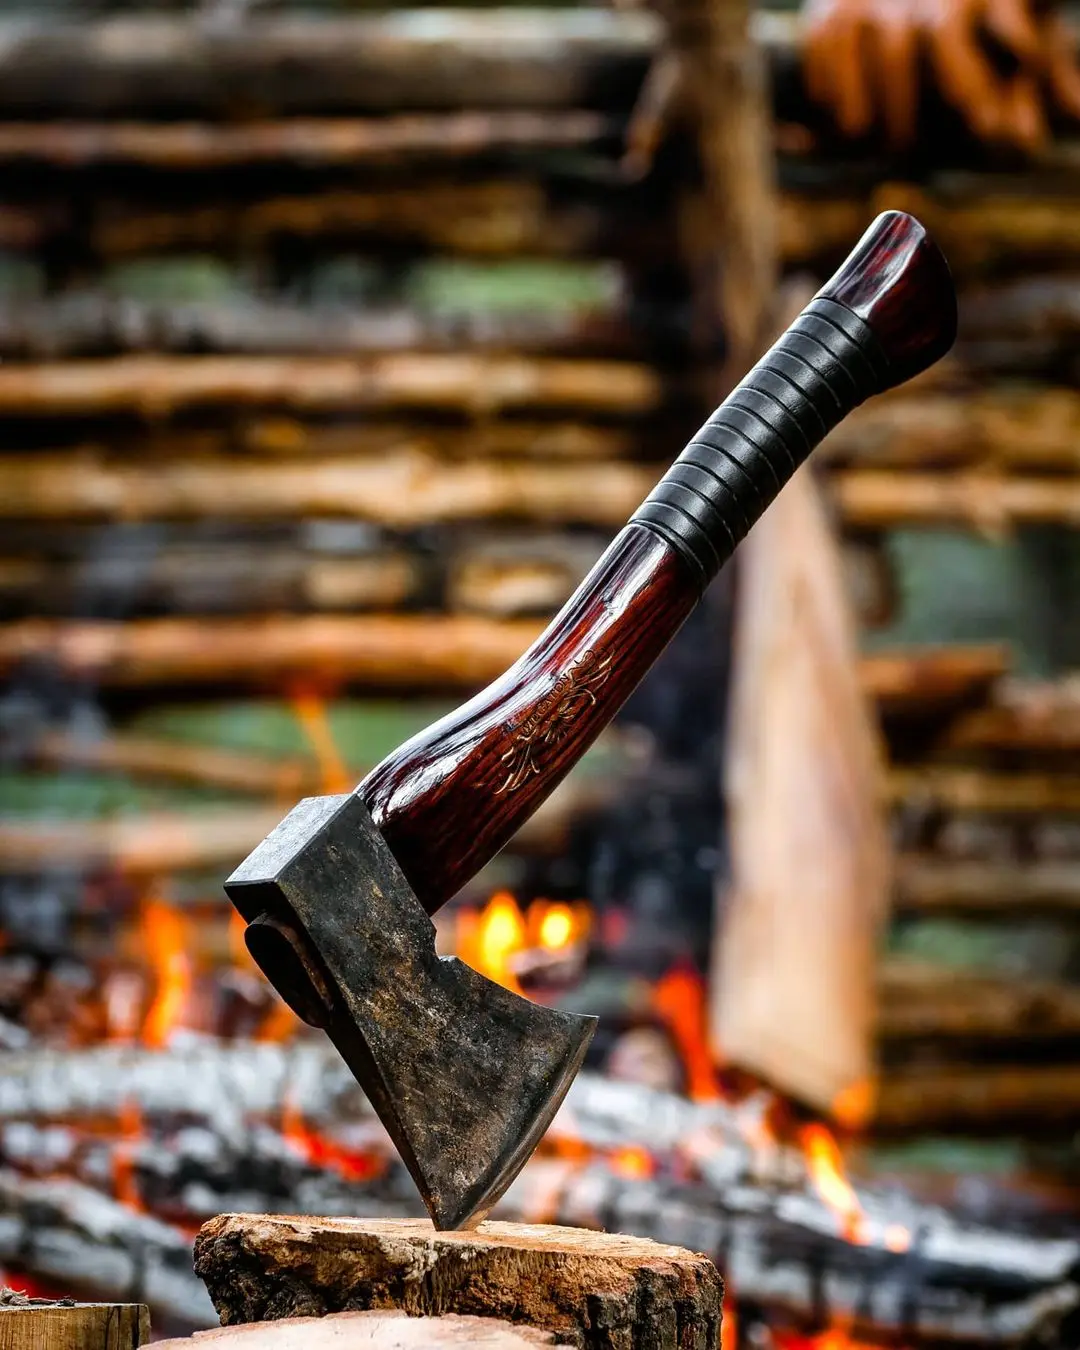 Megaton Fenix Axe Machete Camping Tomahawk Tactical Hunting Outdoor Hand Tool Wood Meat Cutter Axes - Axe - AliExpress